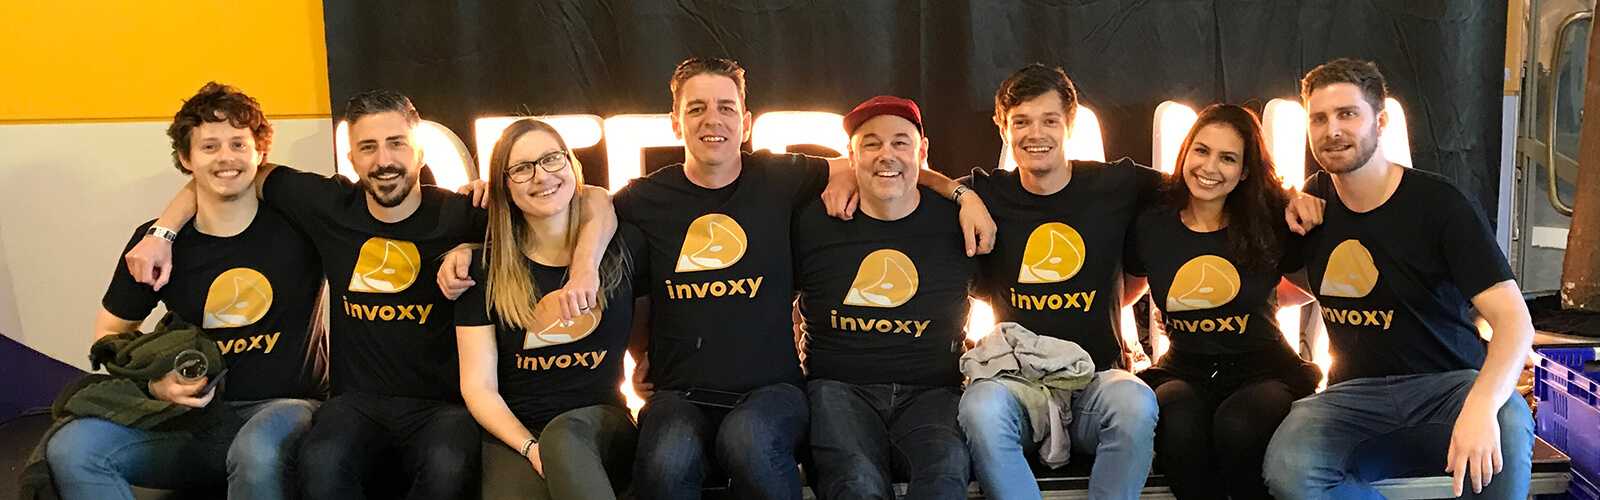 Meet the Invoxy Team